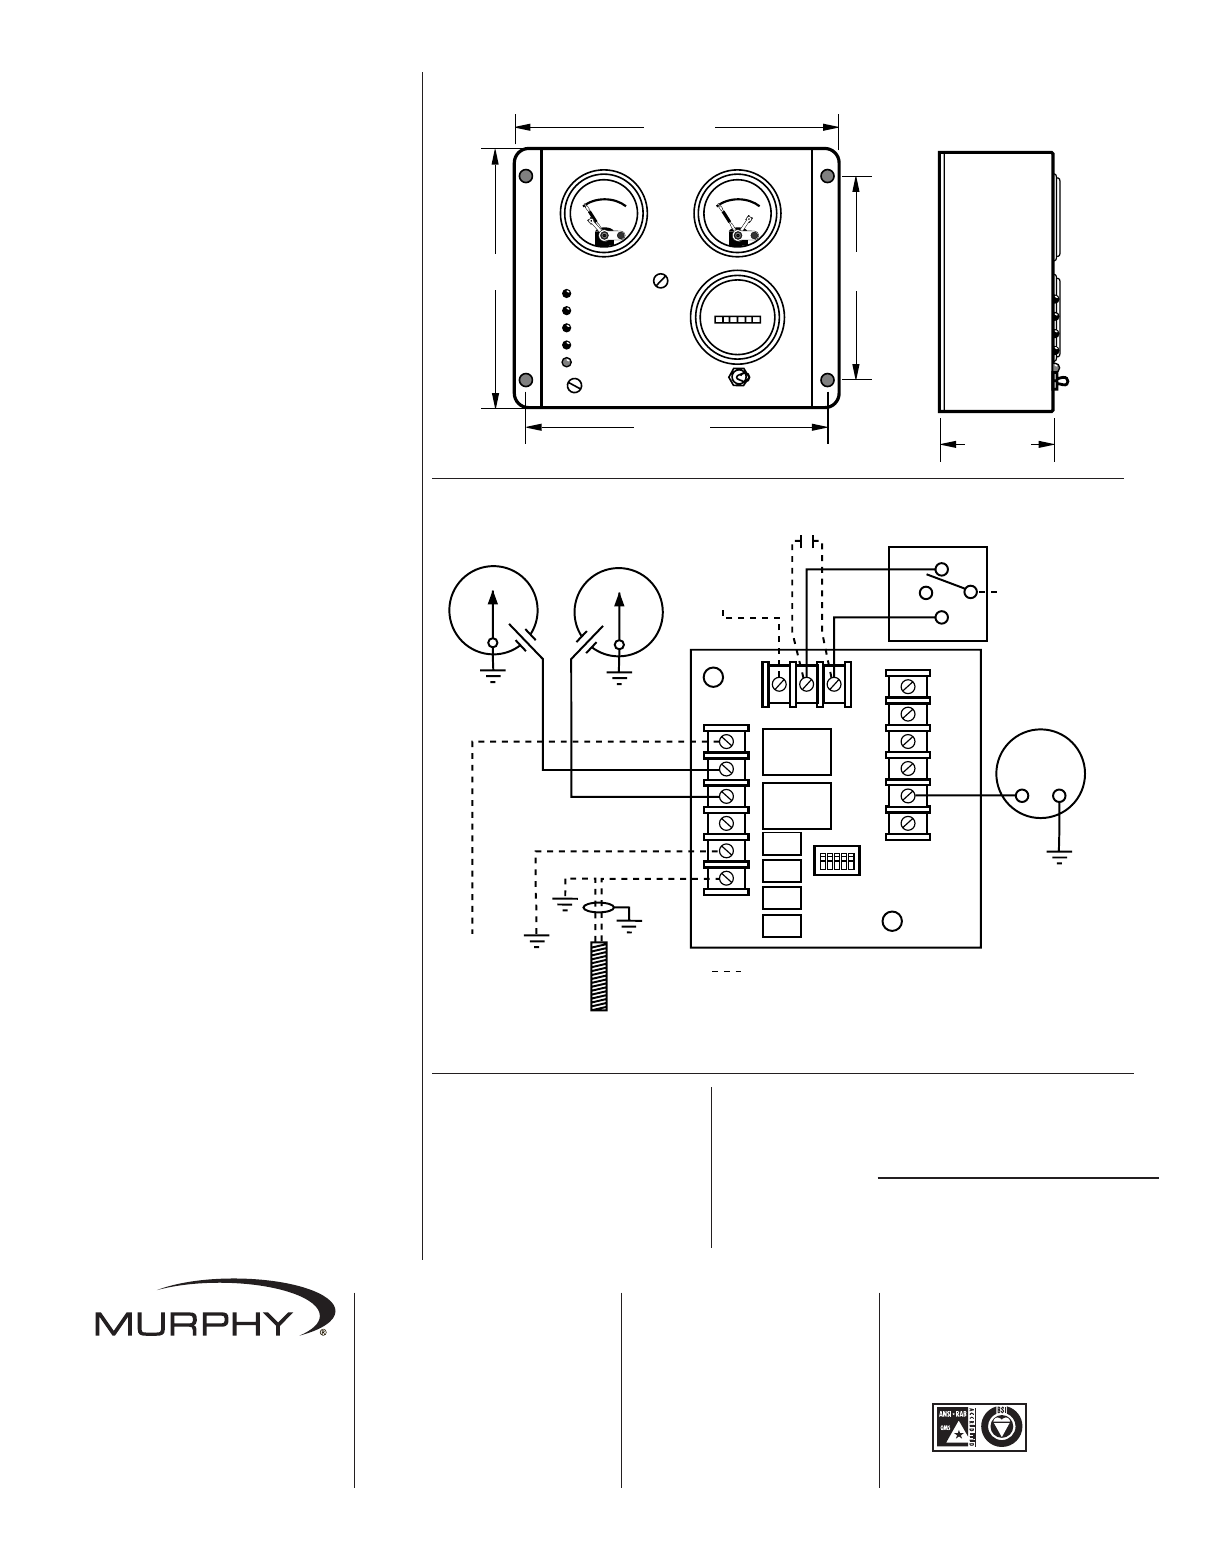 Murphy Panel Wiring Diagram - Wiring Diagram Schemas